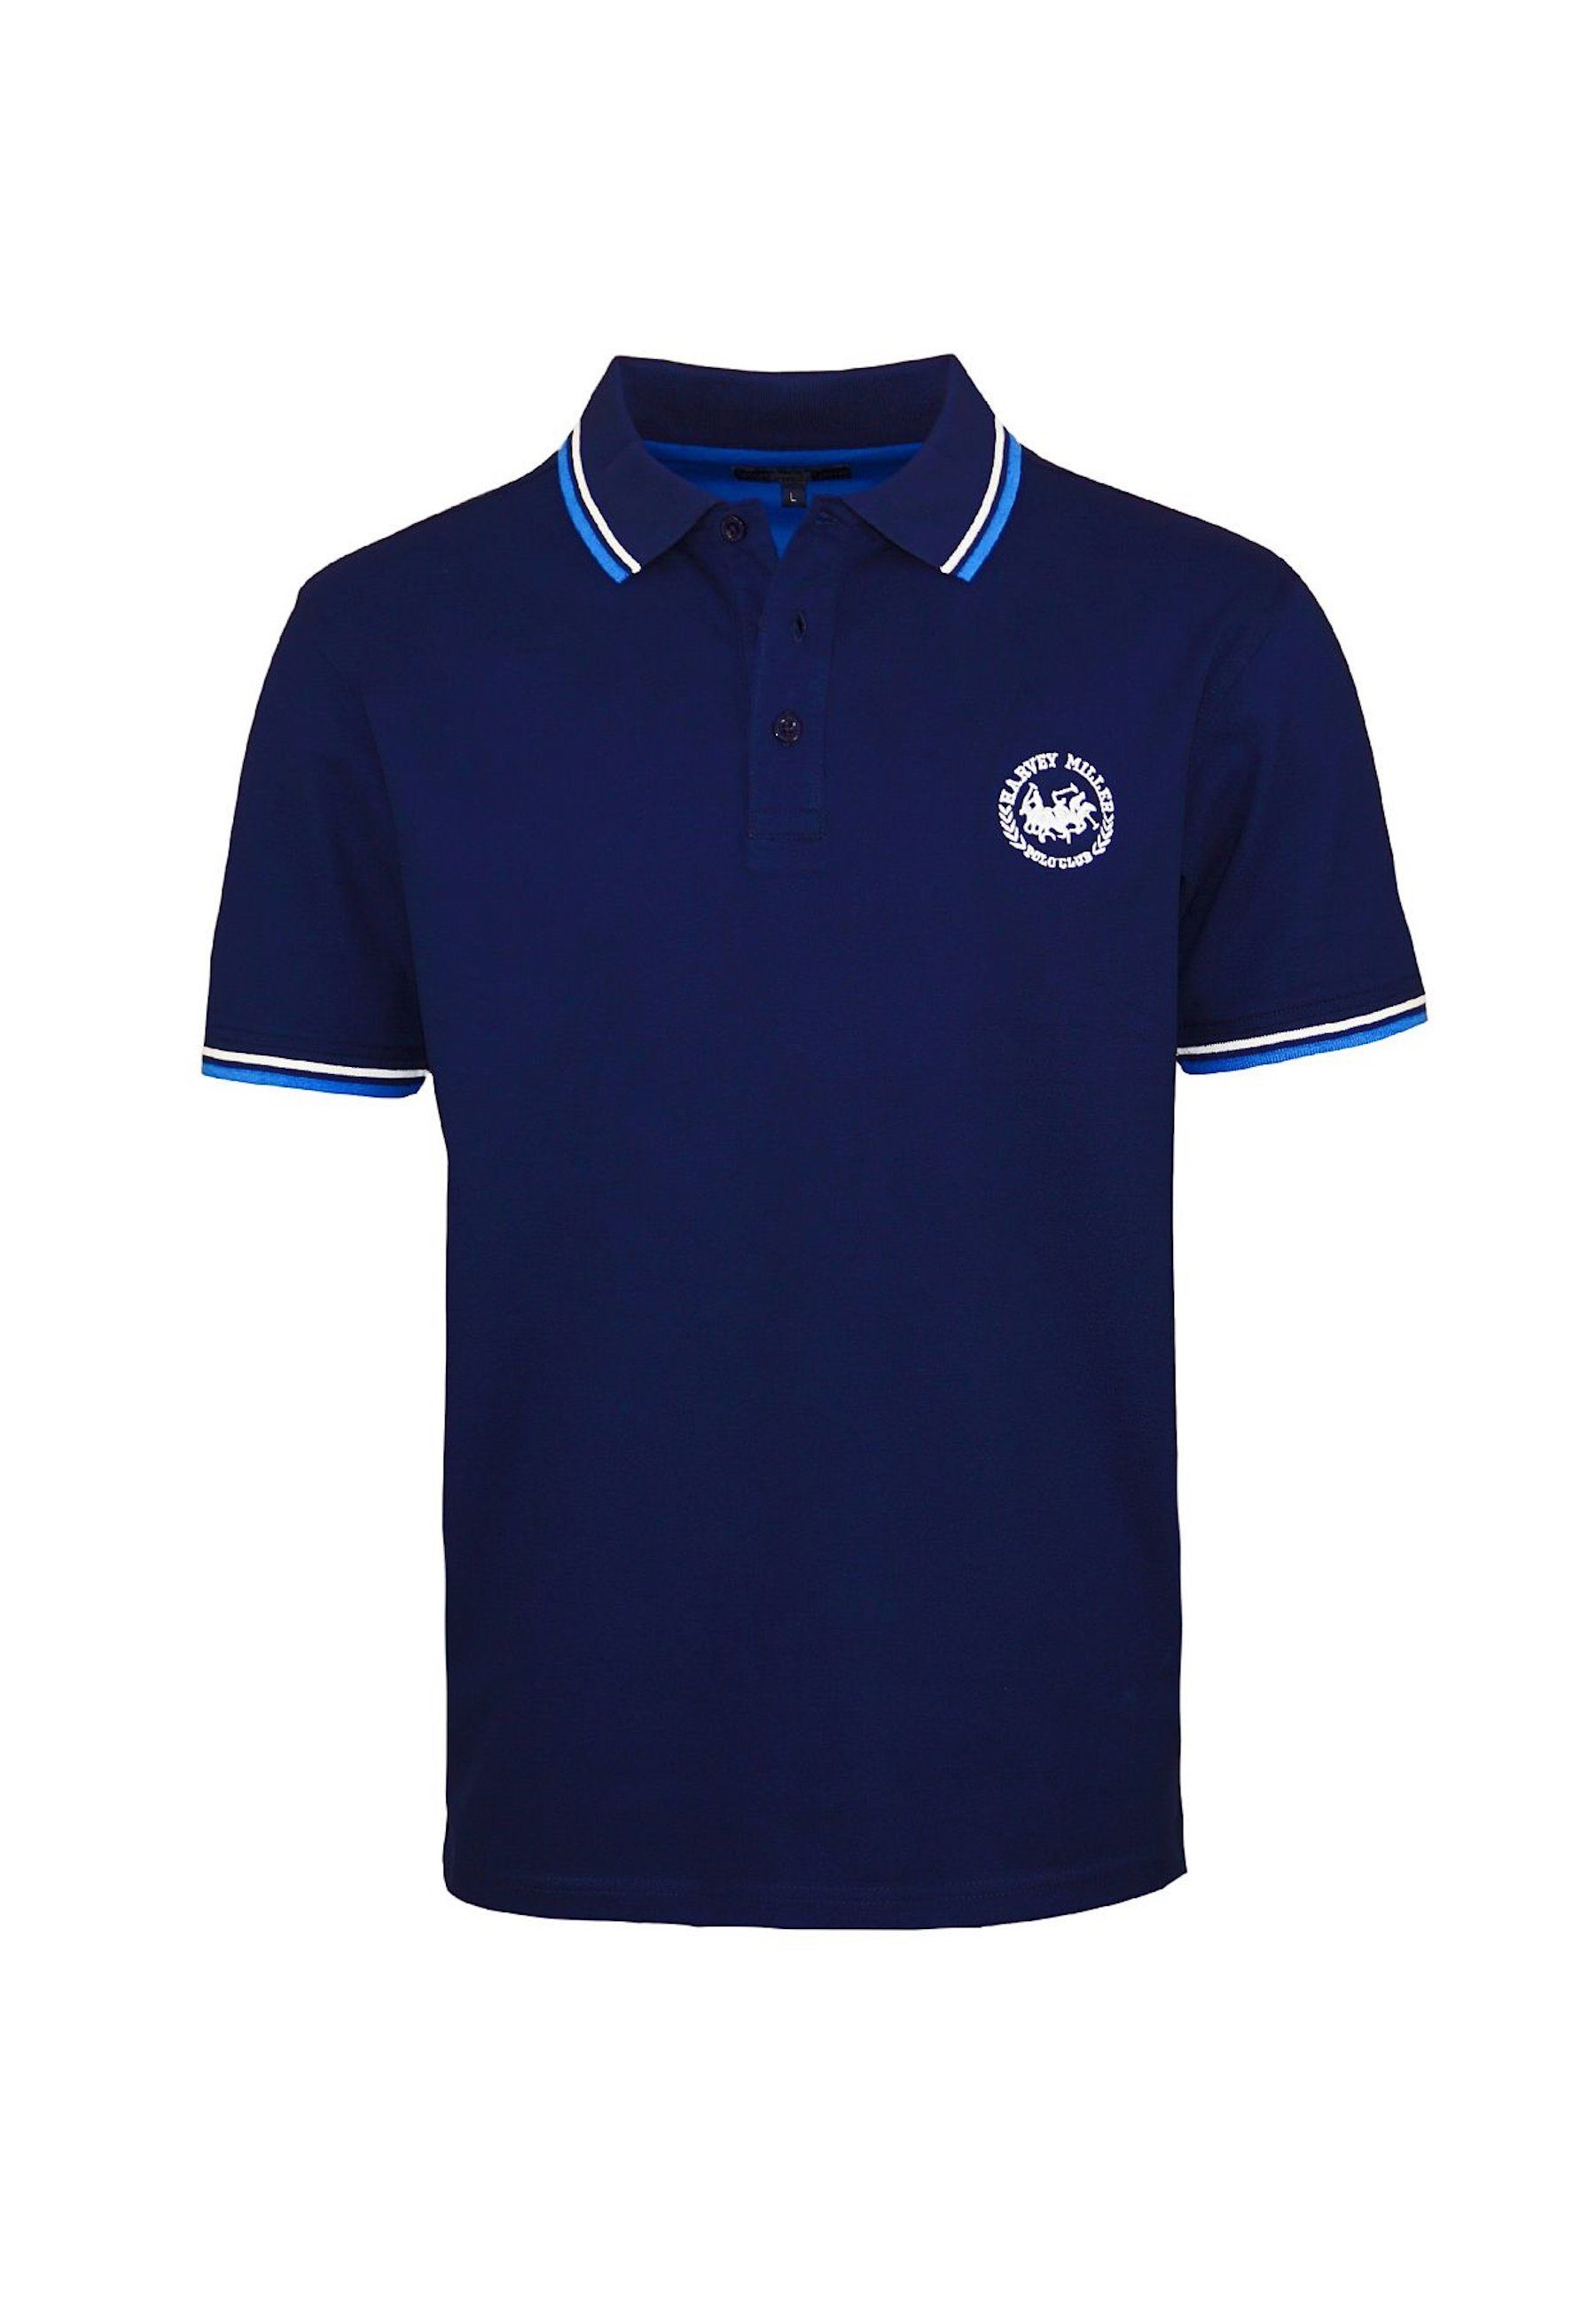 Harvey Miller Poloshirt Polo Poloshirt Fashion Polohemd Kurzarm Shirt dunkelblau